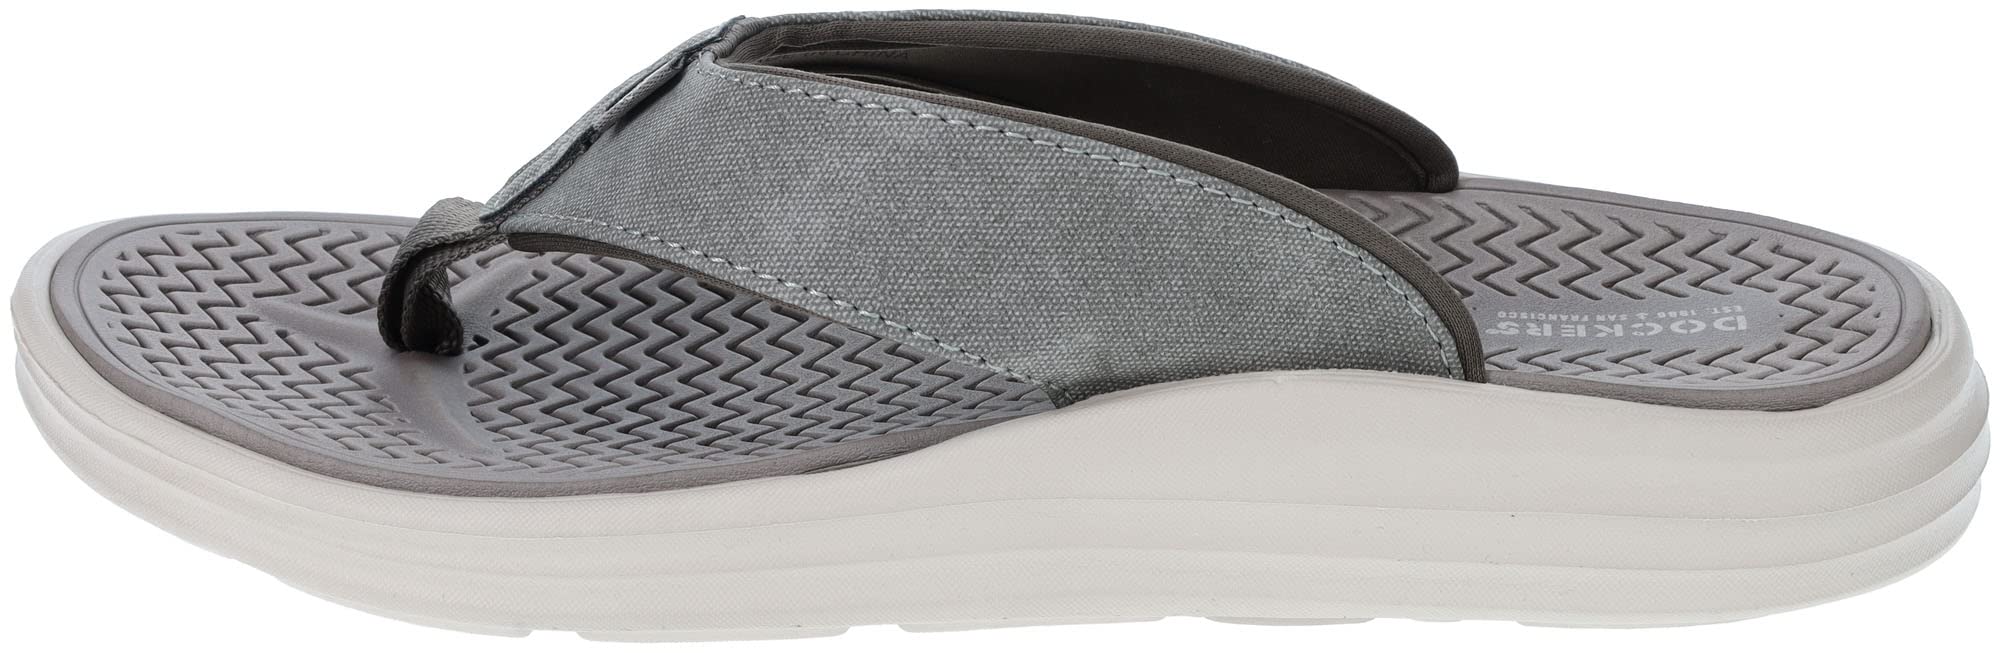 Dockers Mens' Flip Flop Sport Sandals, Tan, Size 8 and 9, $9.93 - Amazon